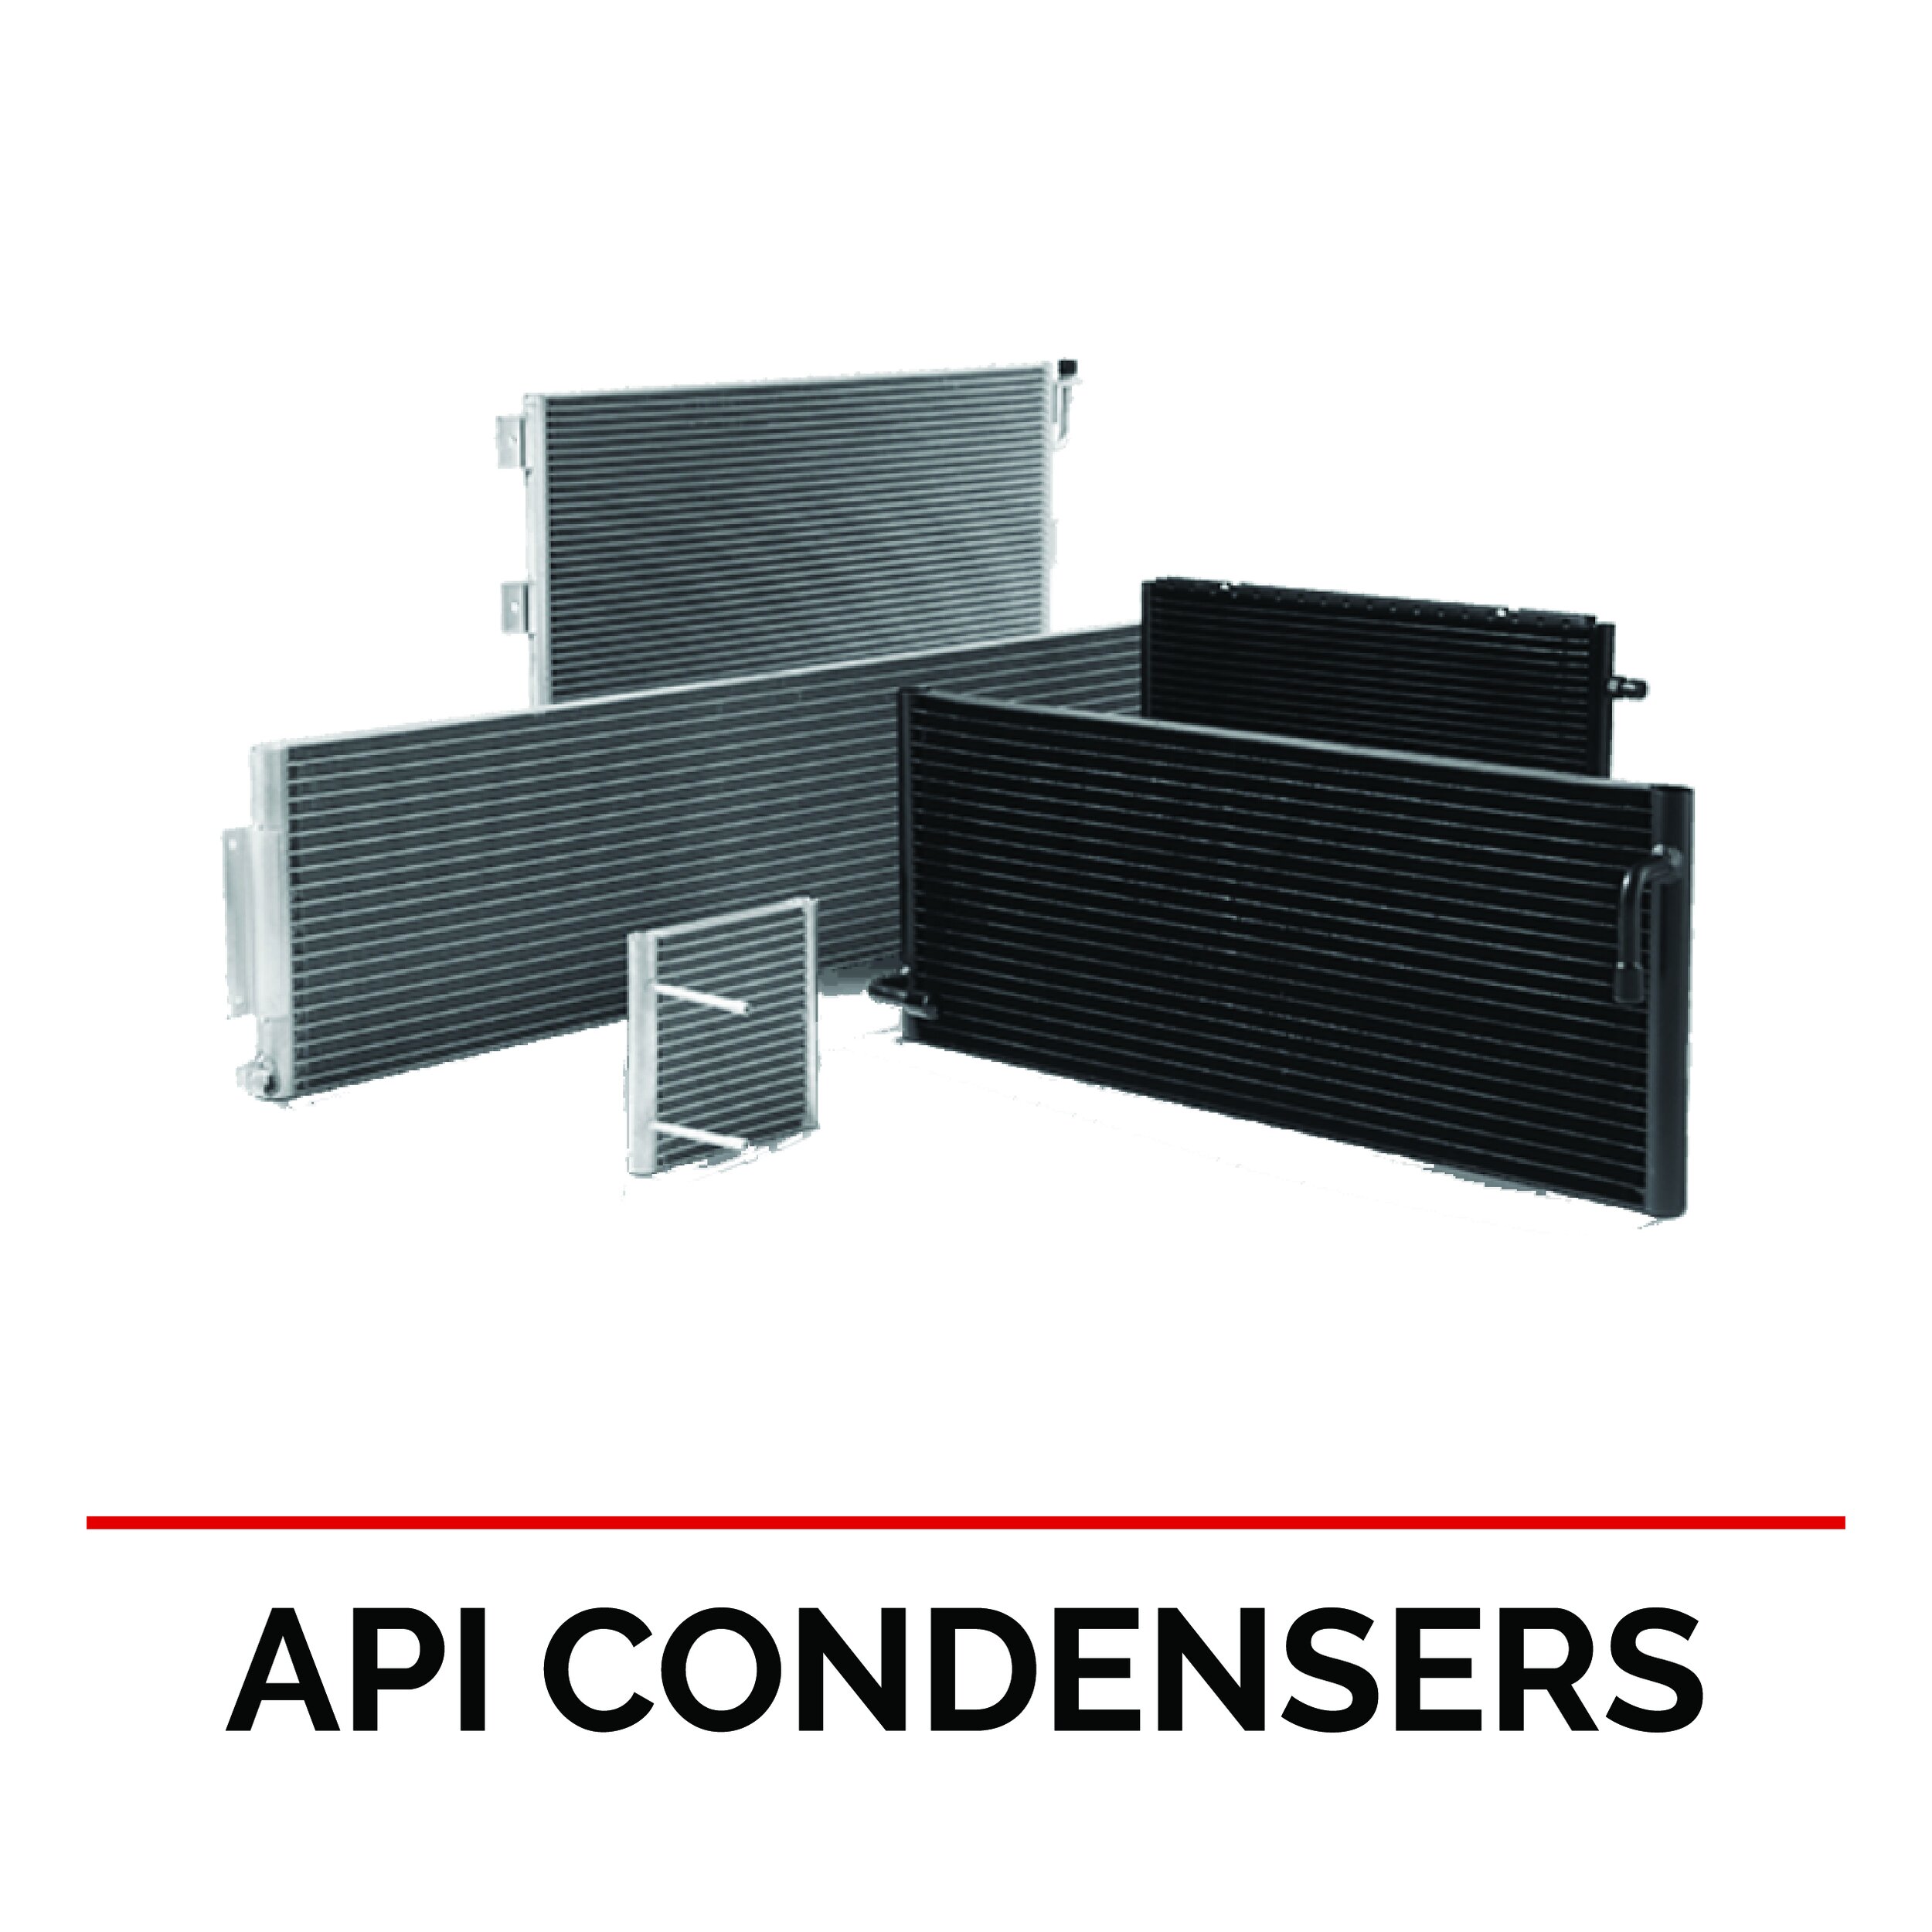 API CONDENSERS.jpg